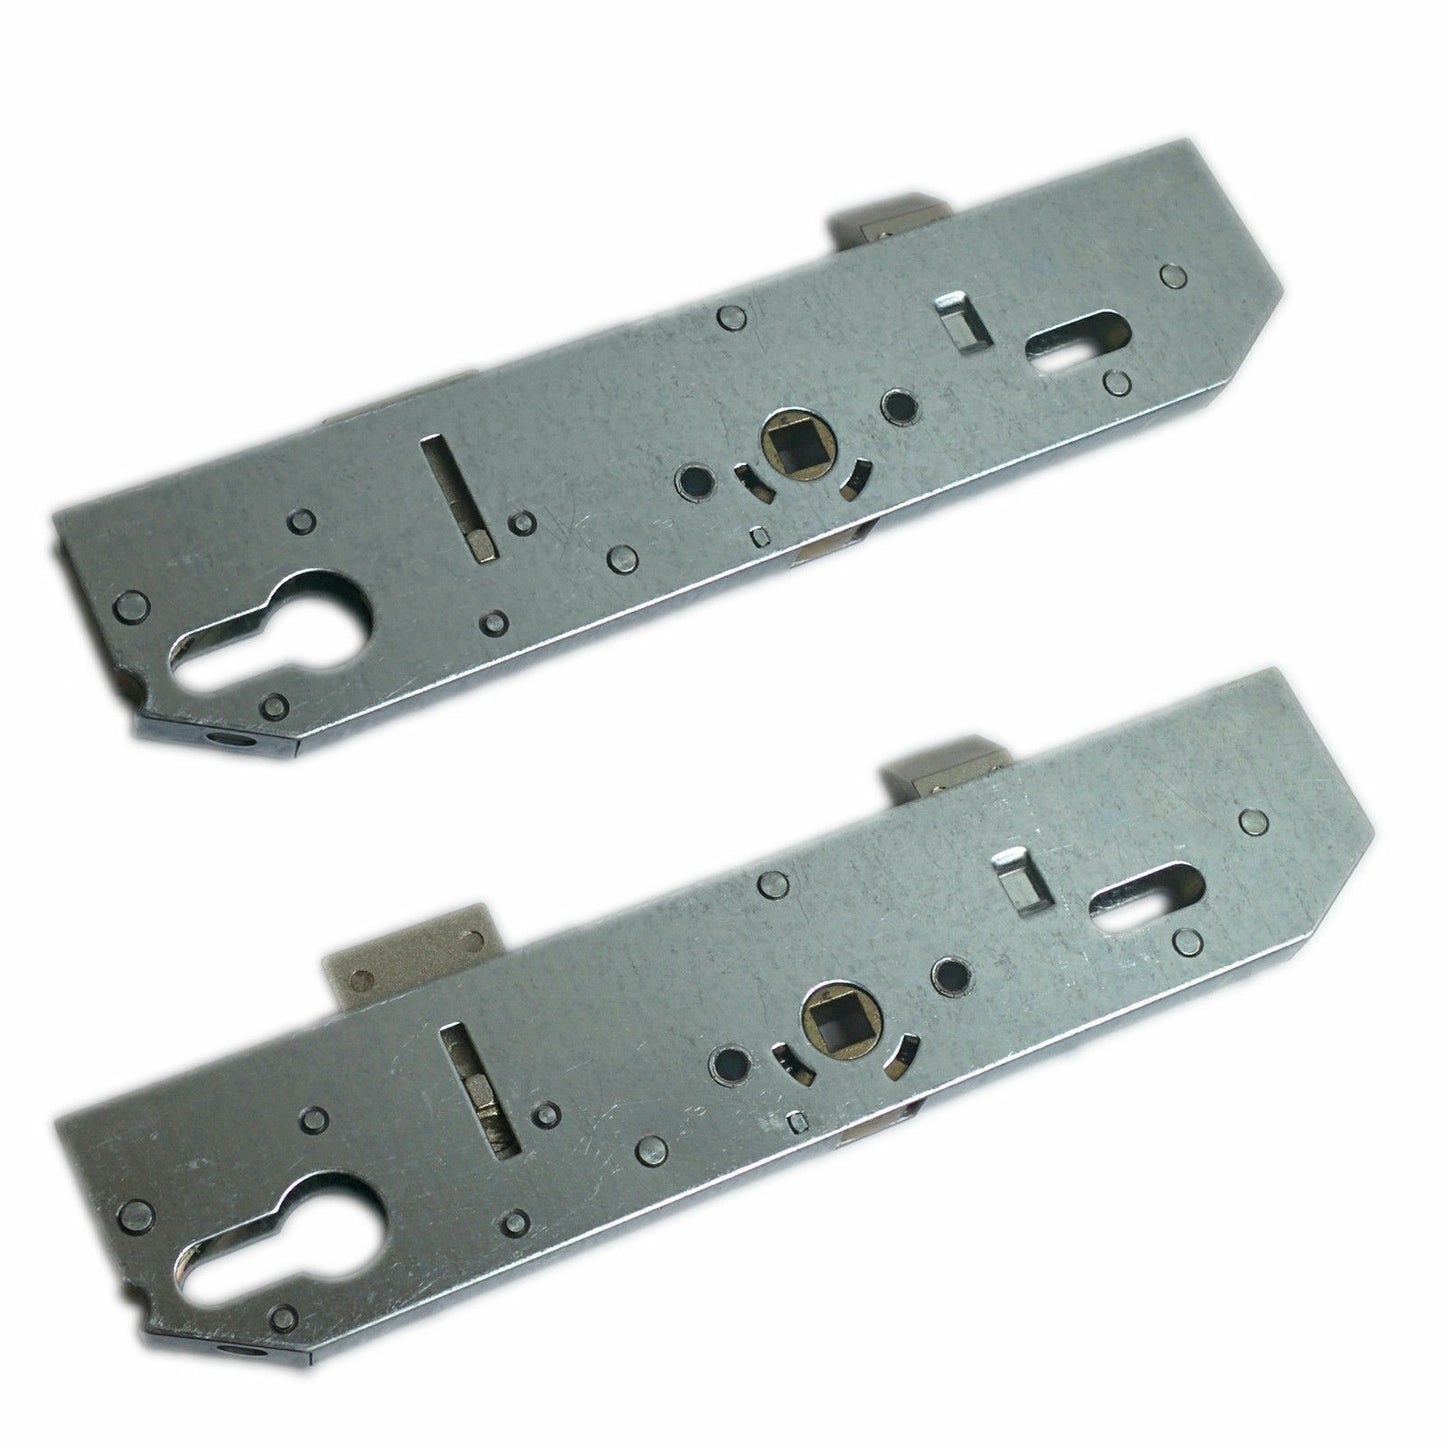 Mila Coldseal Replacement uPVC Gear Box Door Lock Centre Case 35mm Backset